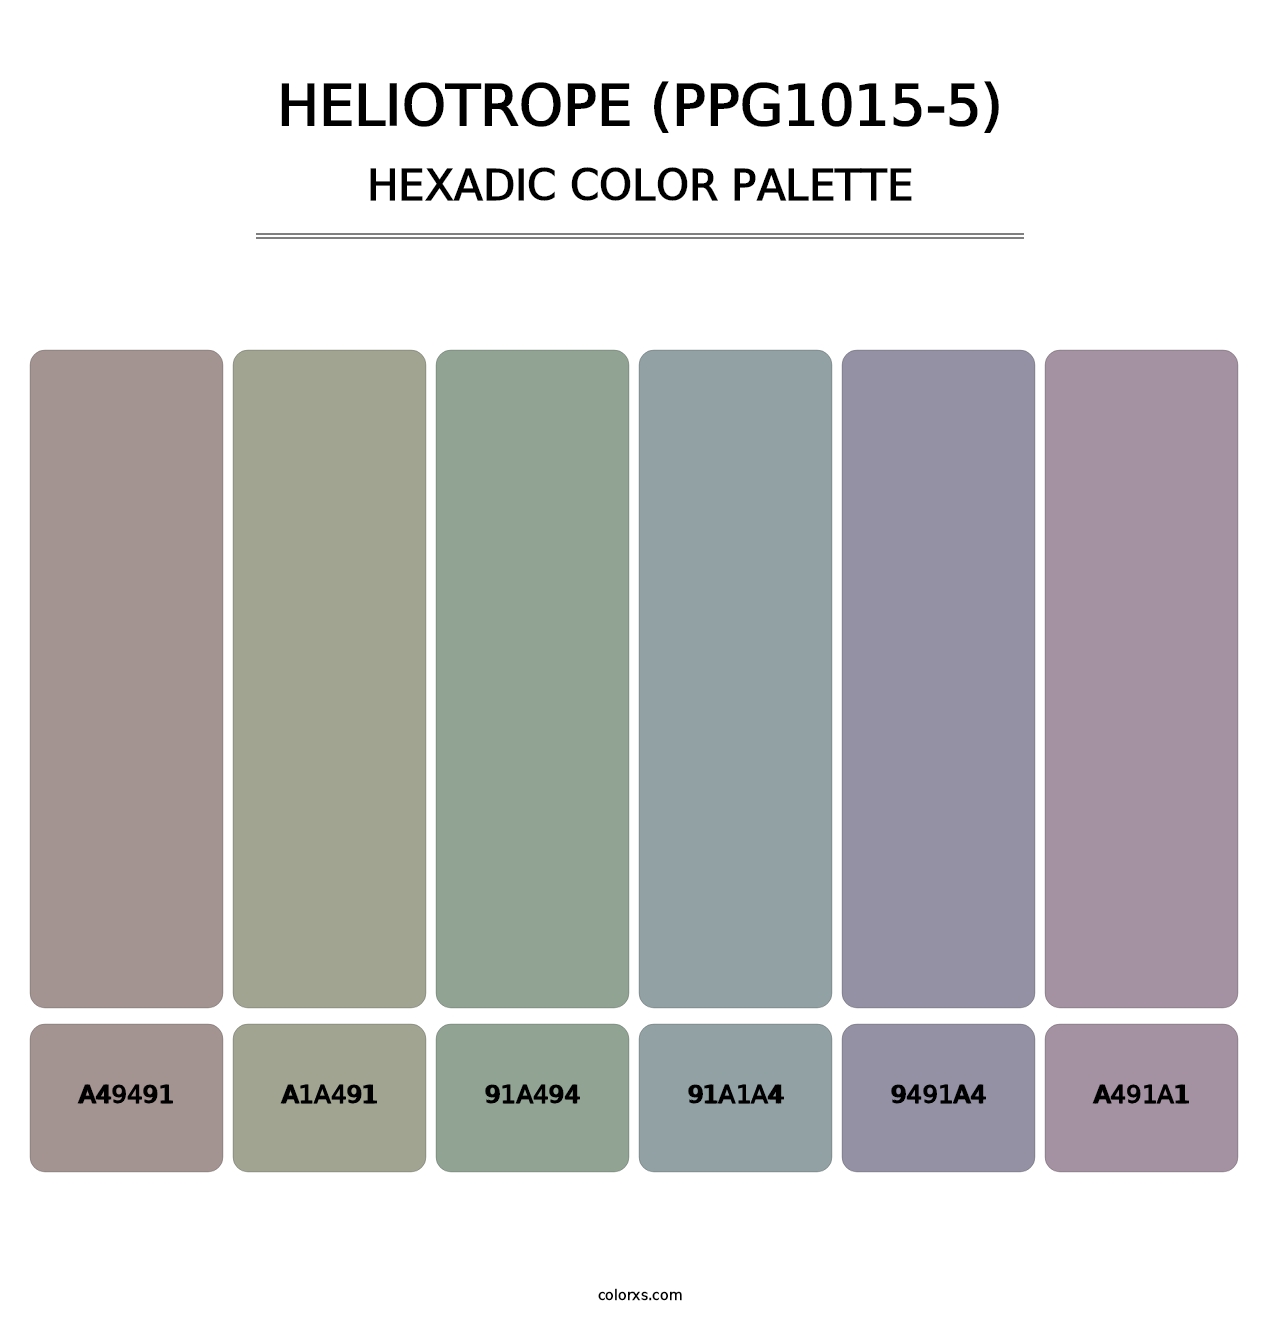 Heliotrope (PPG1015-5) - Hexadic Color Palette